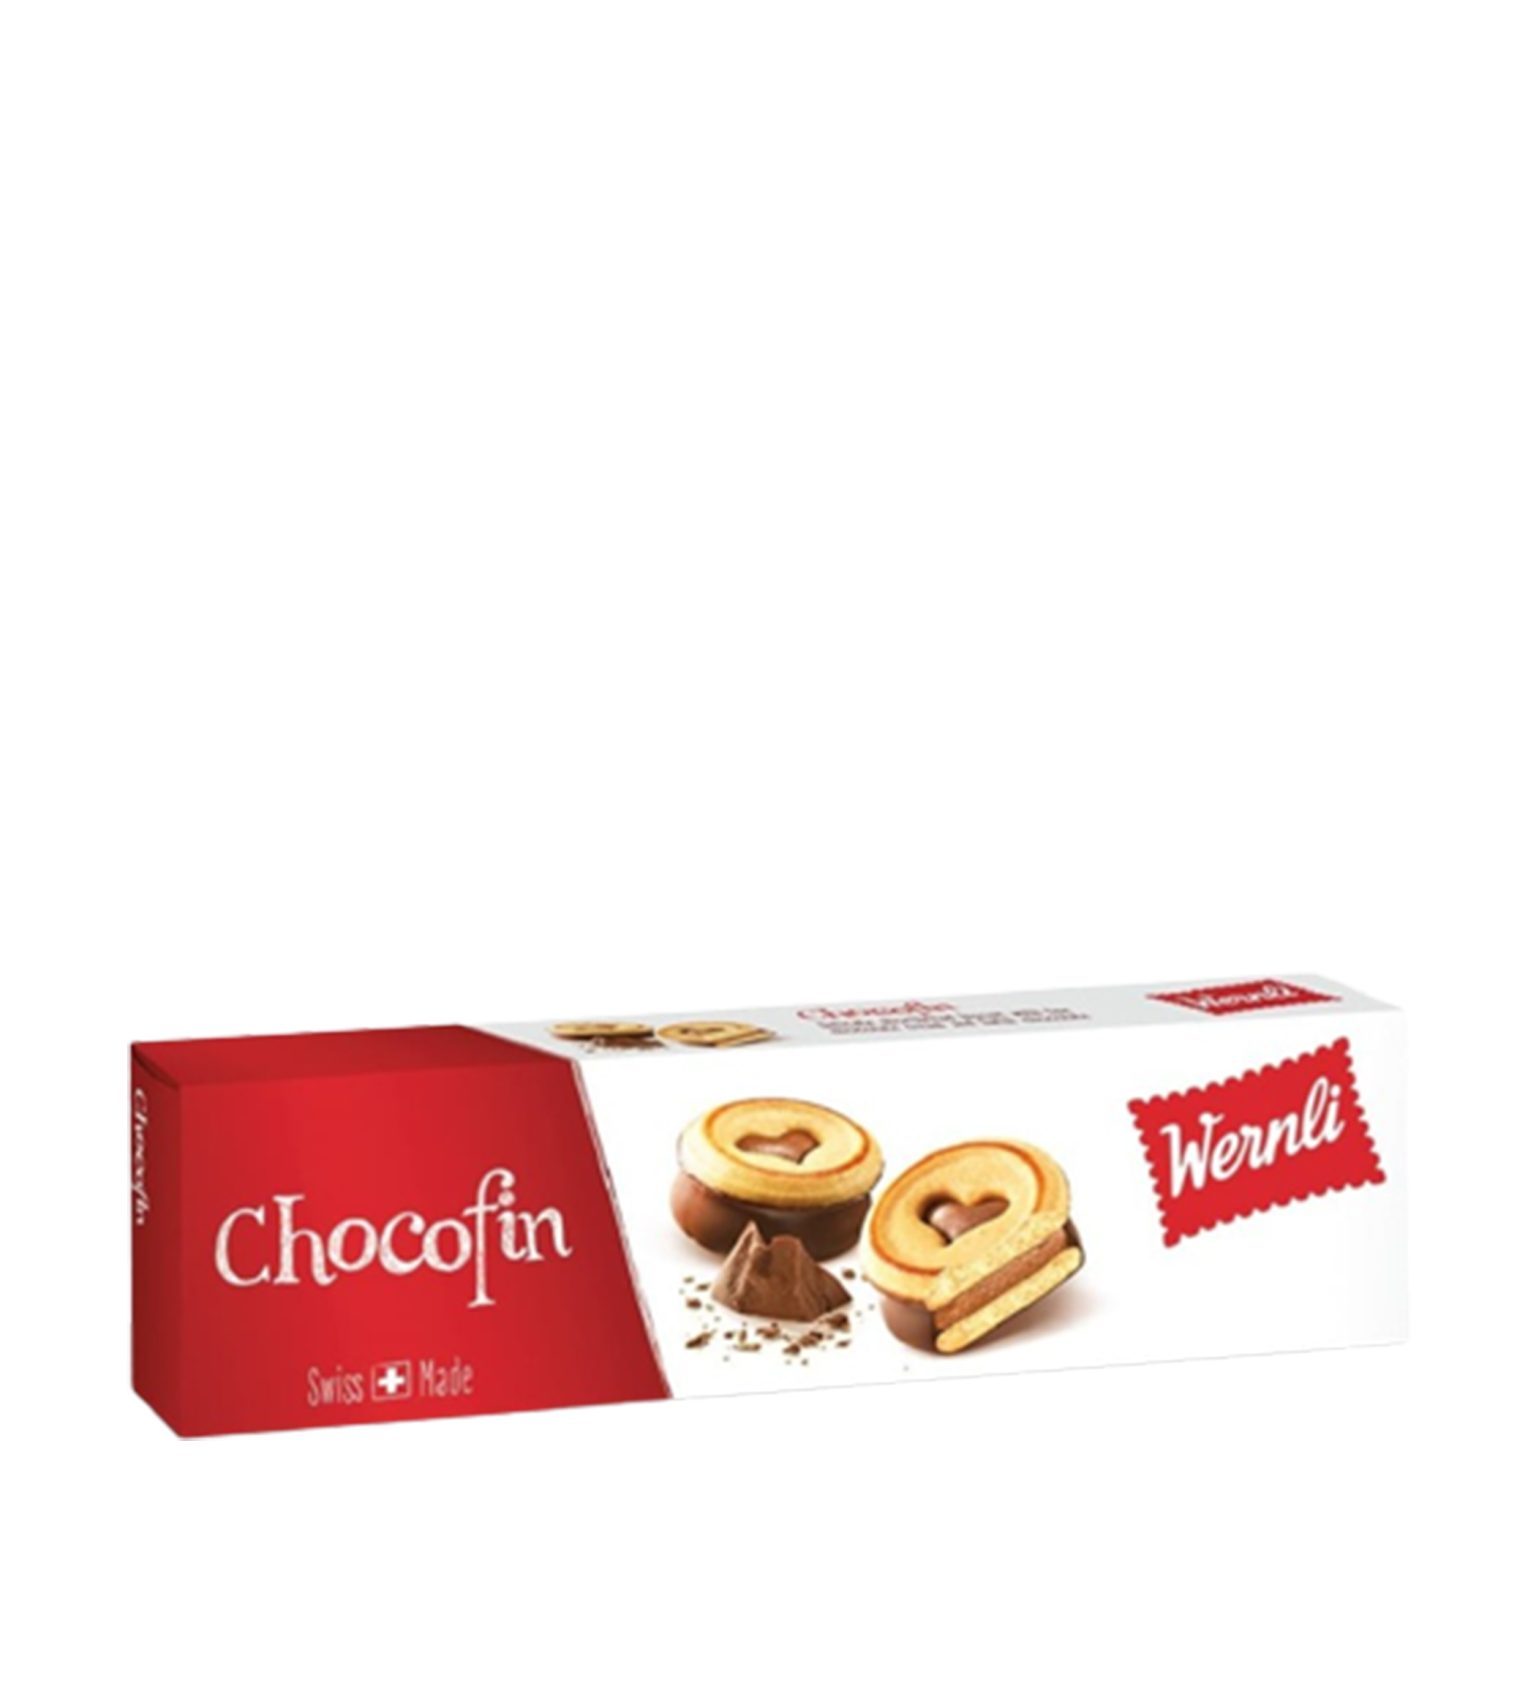 Wernli Biscuit Chocofin 100g-image